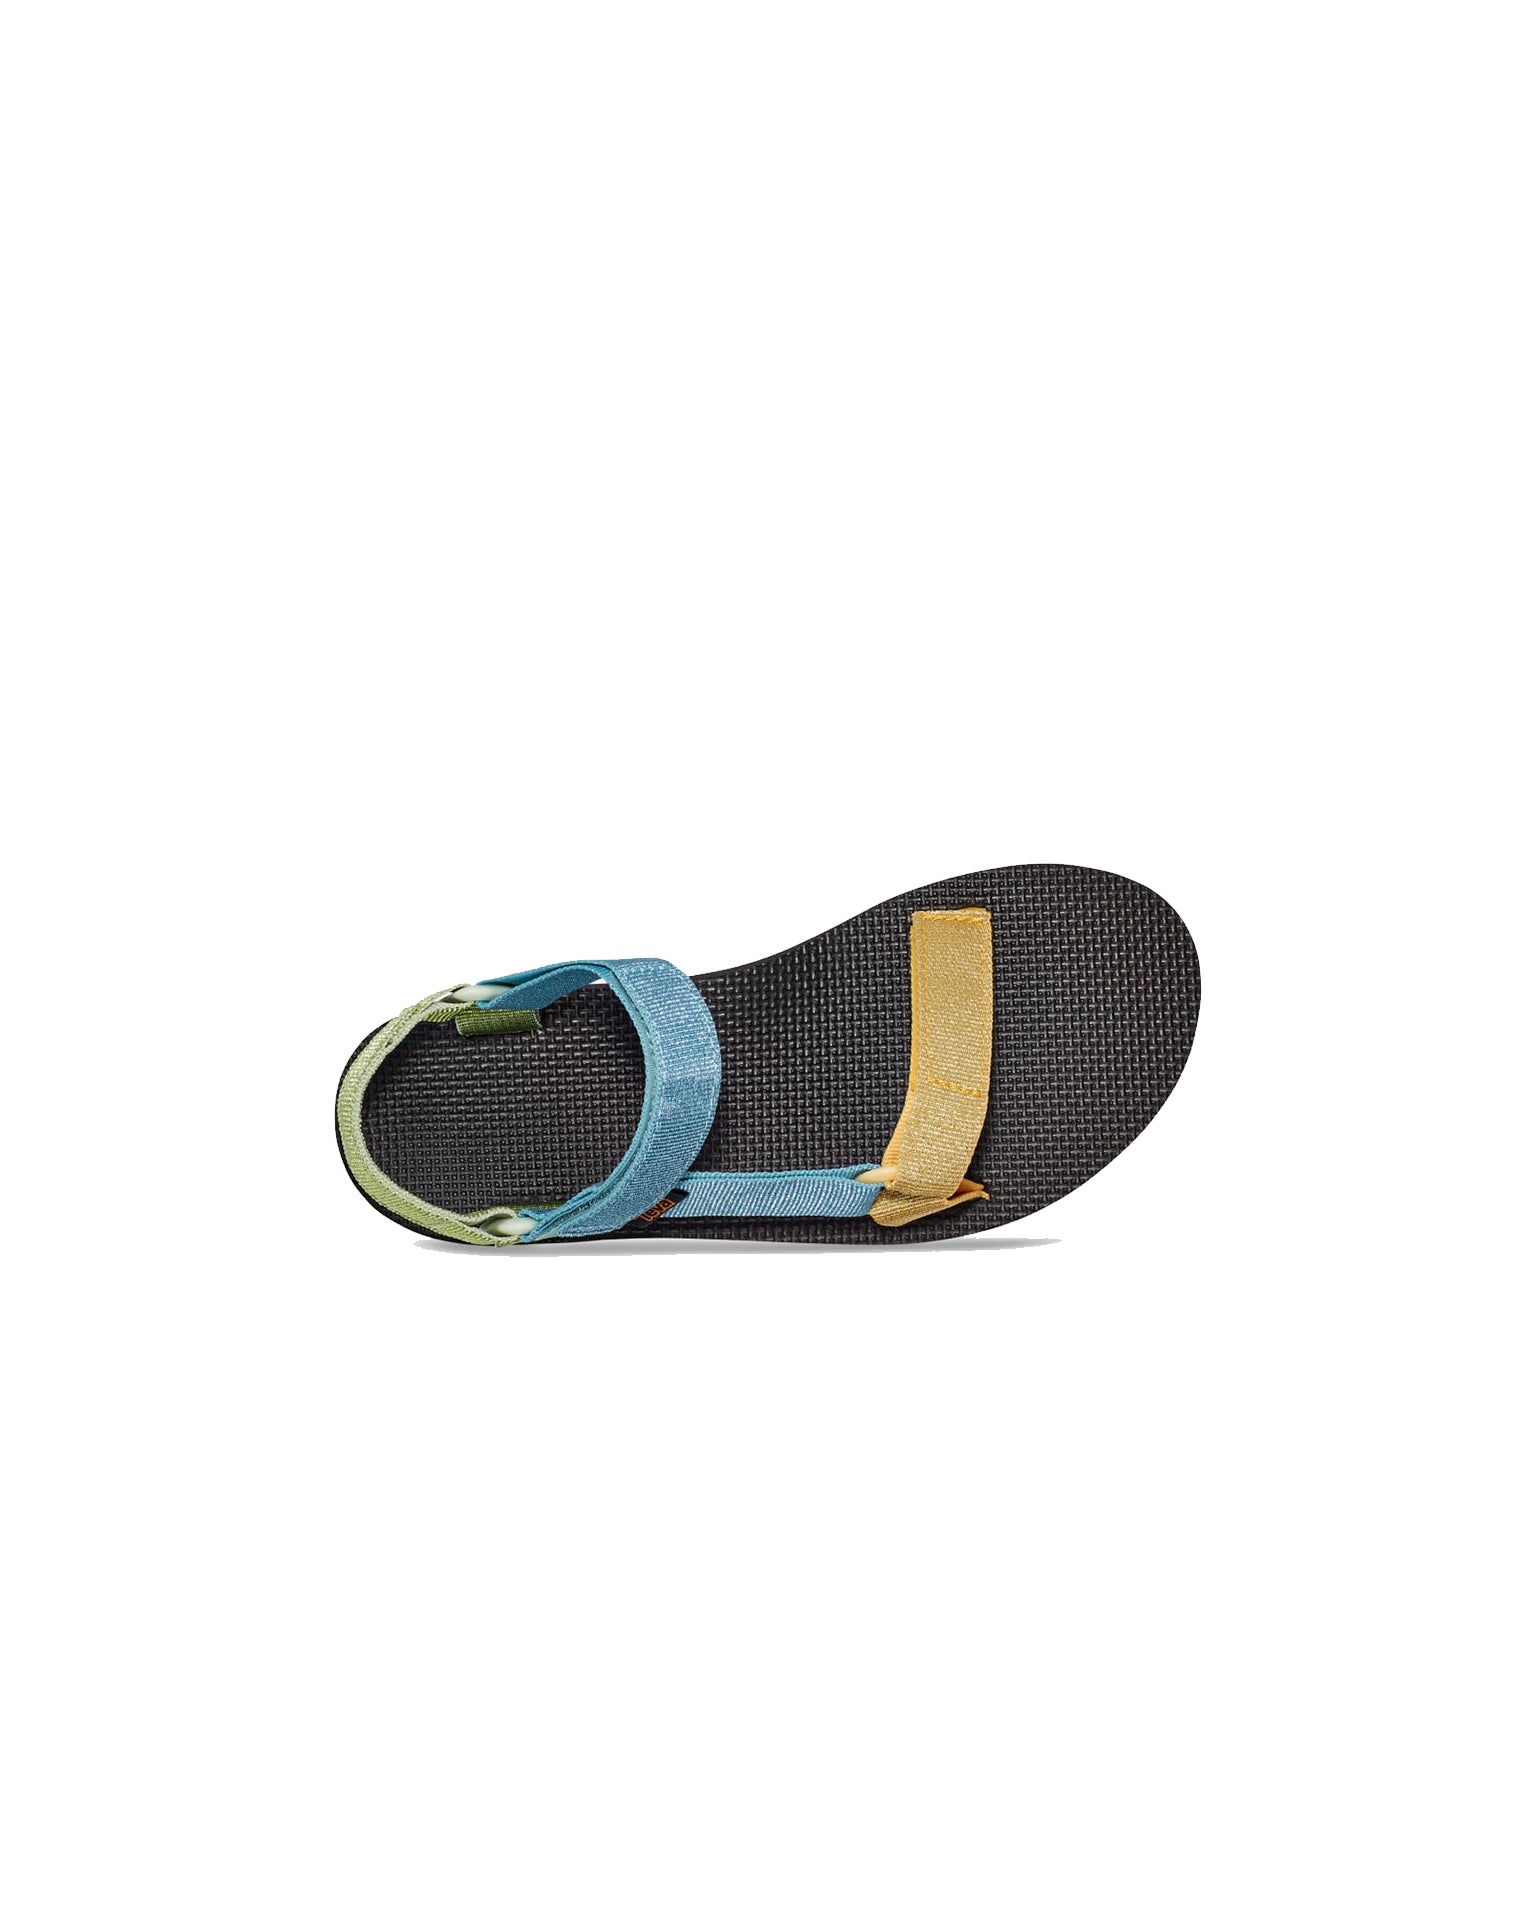 W Midform Universal Sandals - Metallic Blue Multi